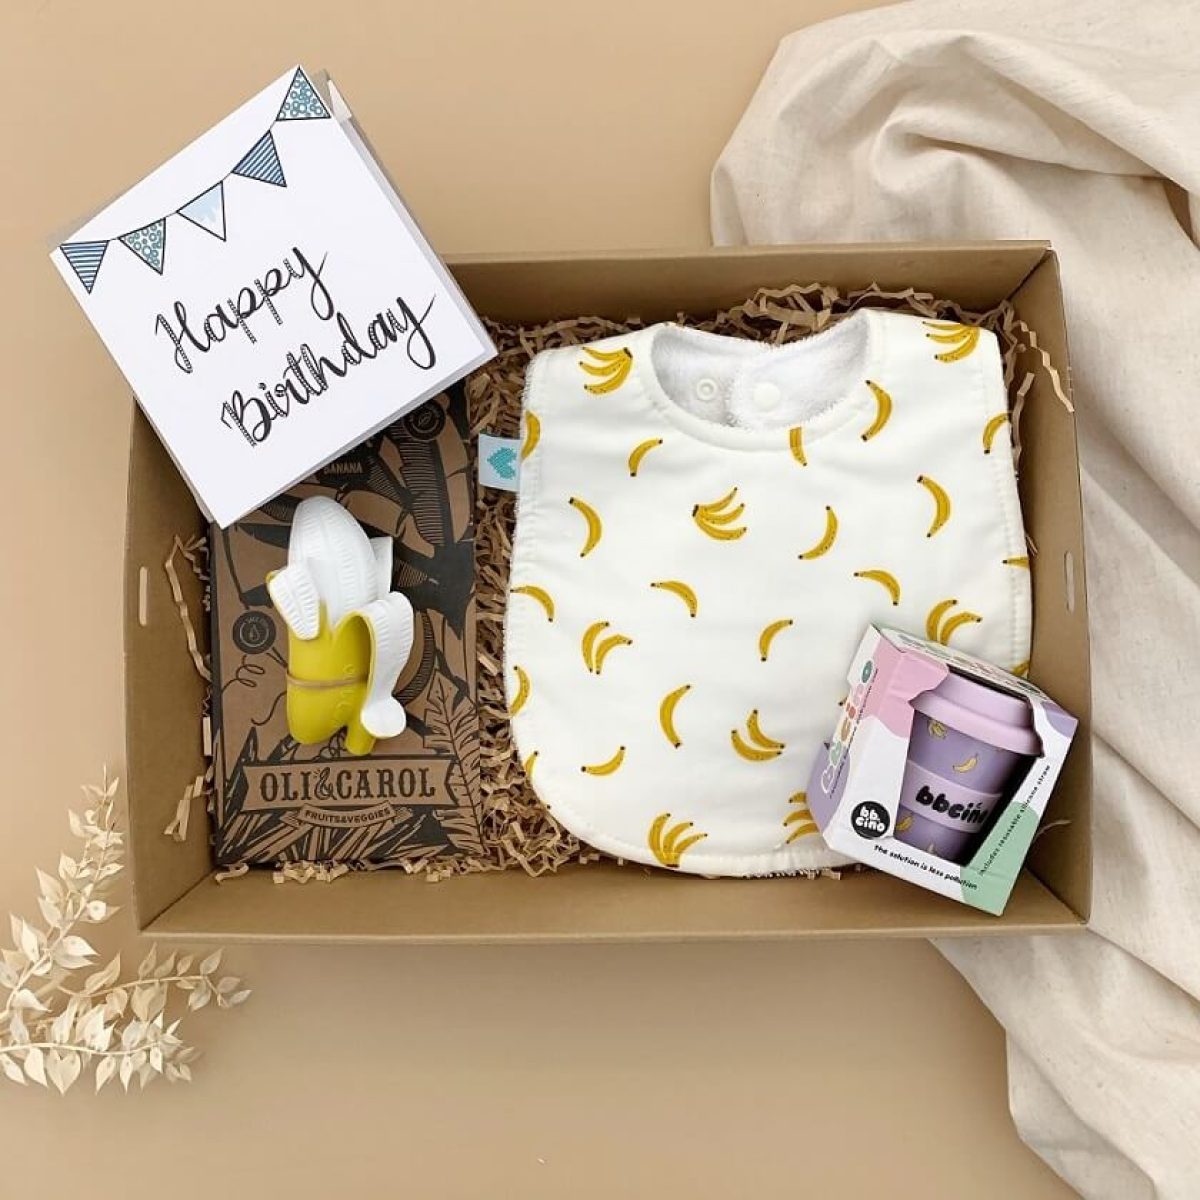 Welcome back haul + birthday gift : r/Sephora